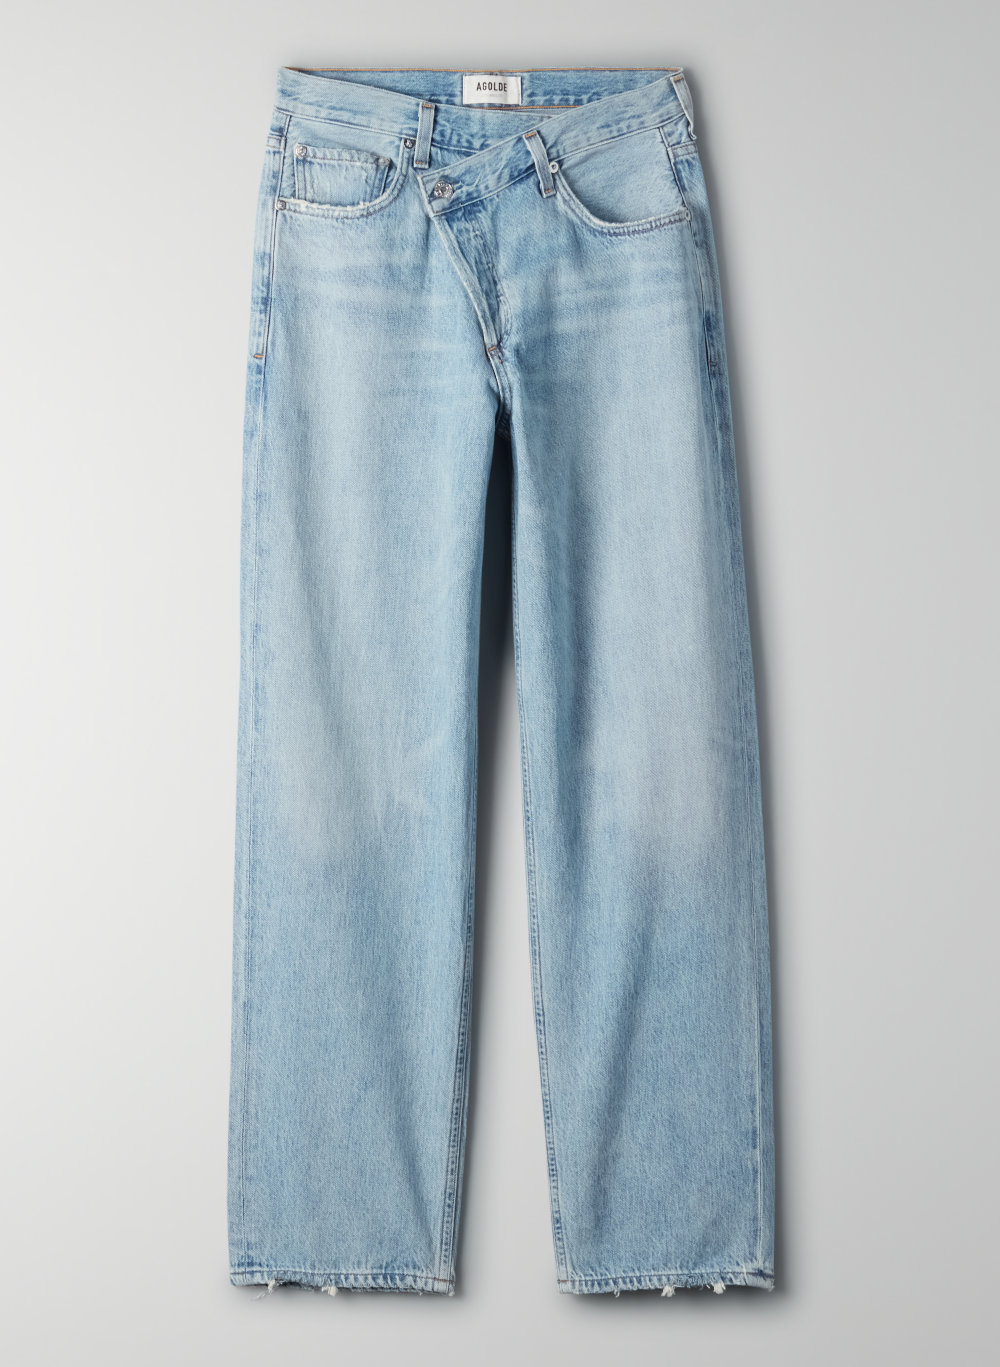 cross button jeans